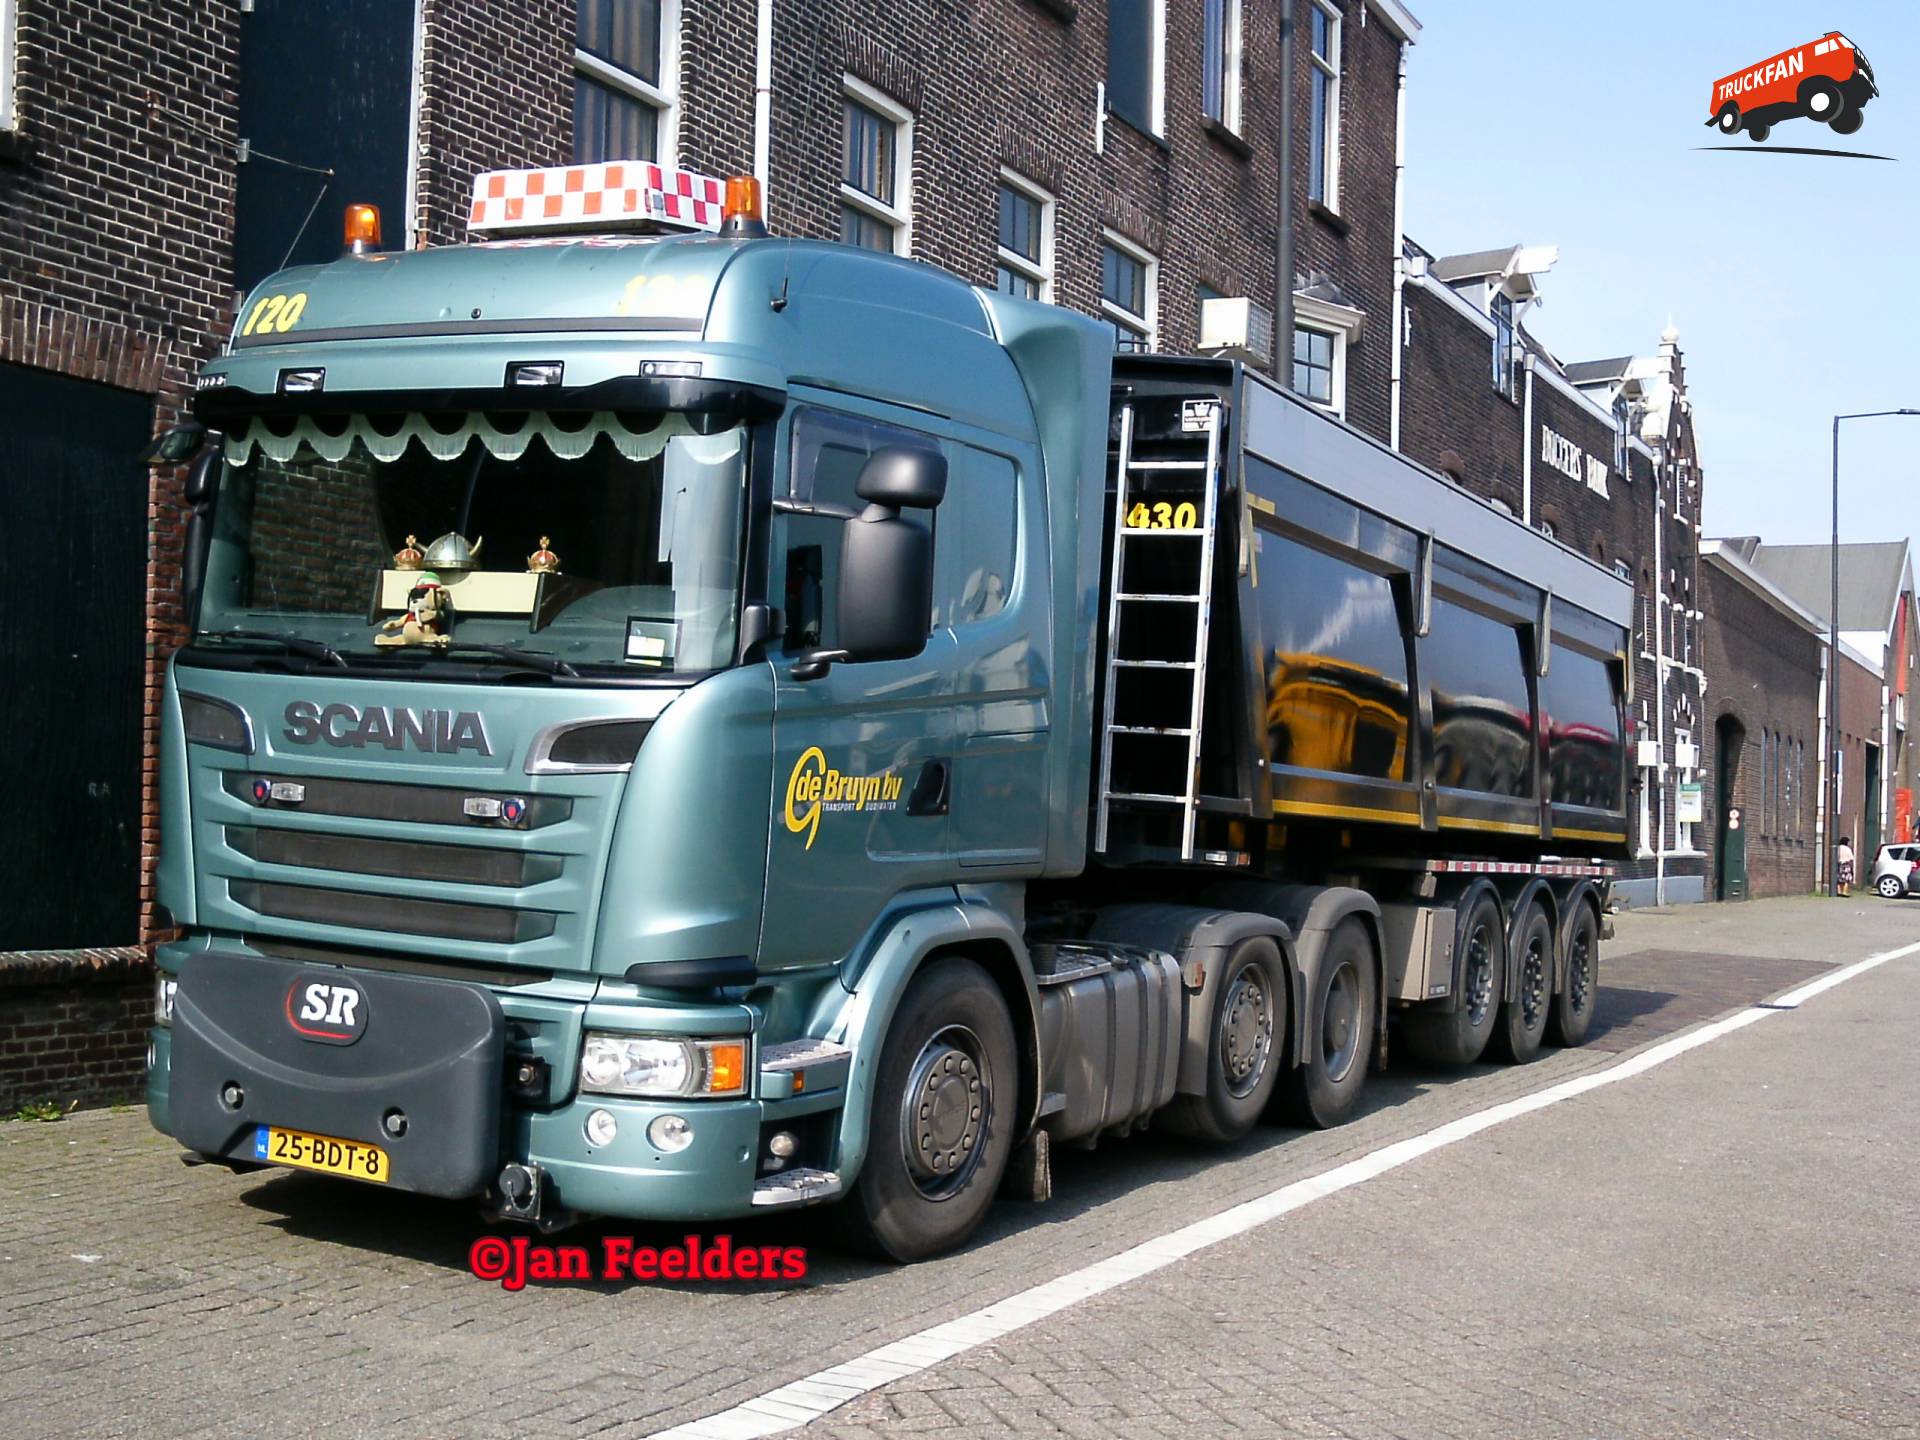 Scania G-serie